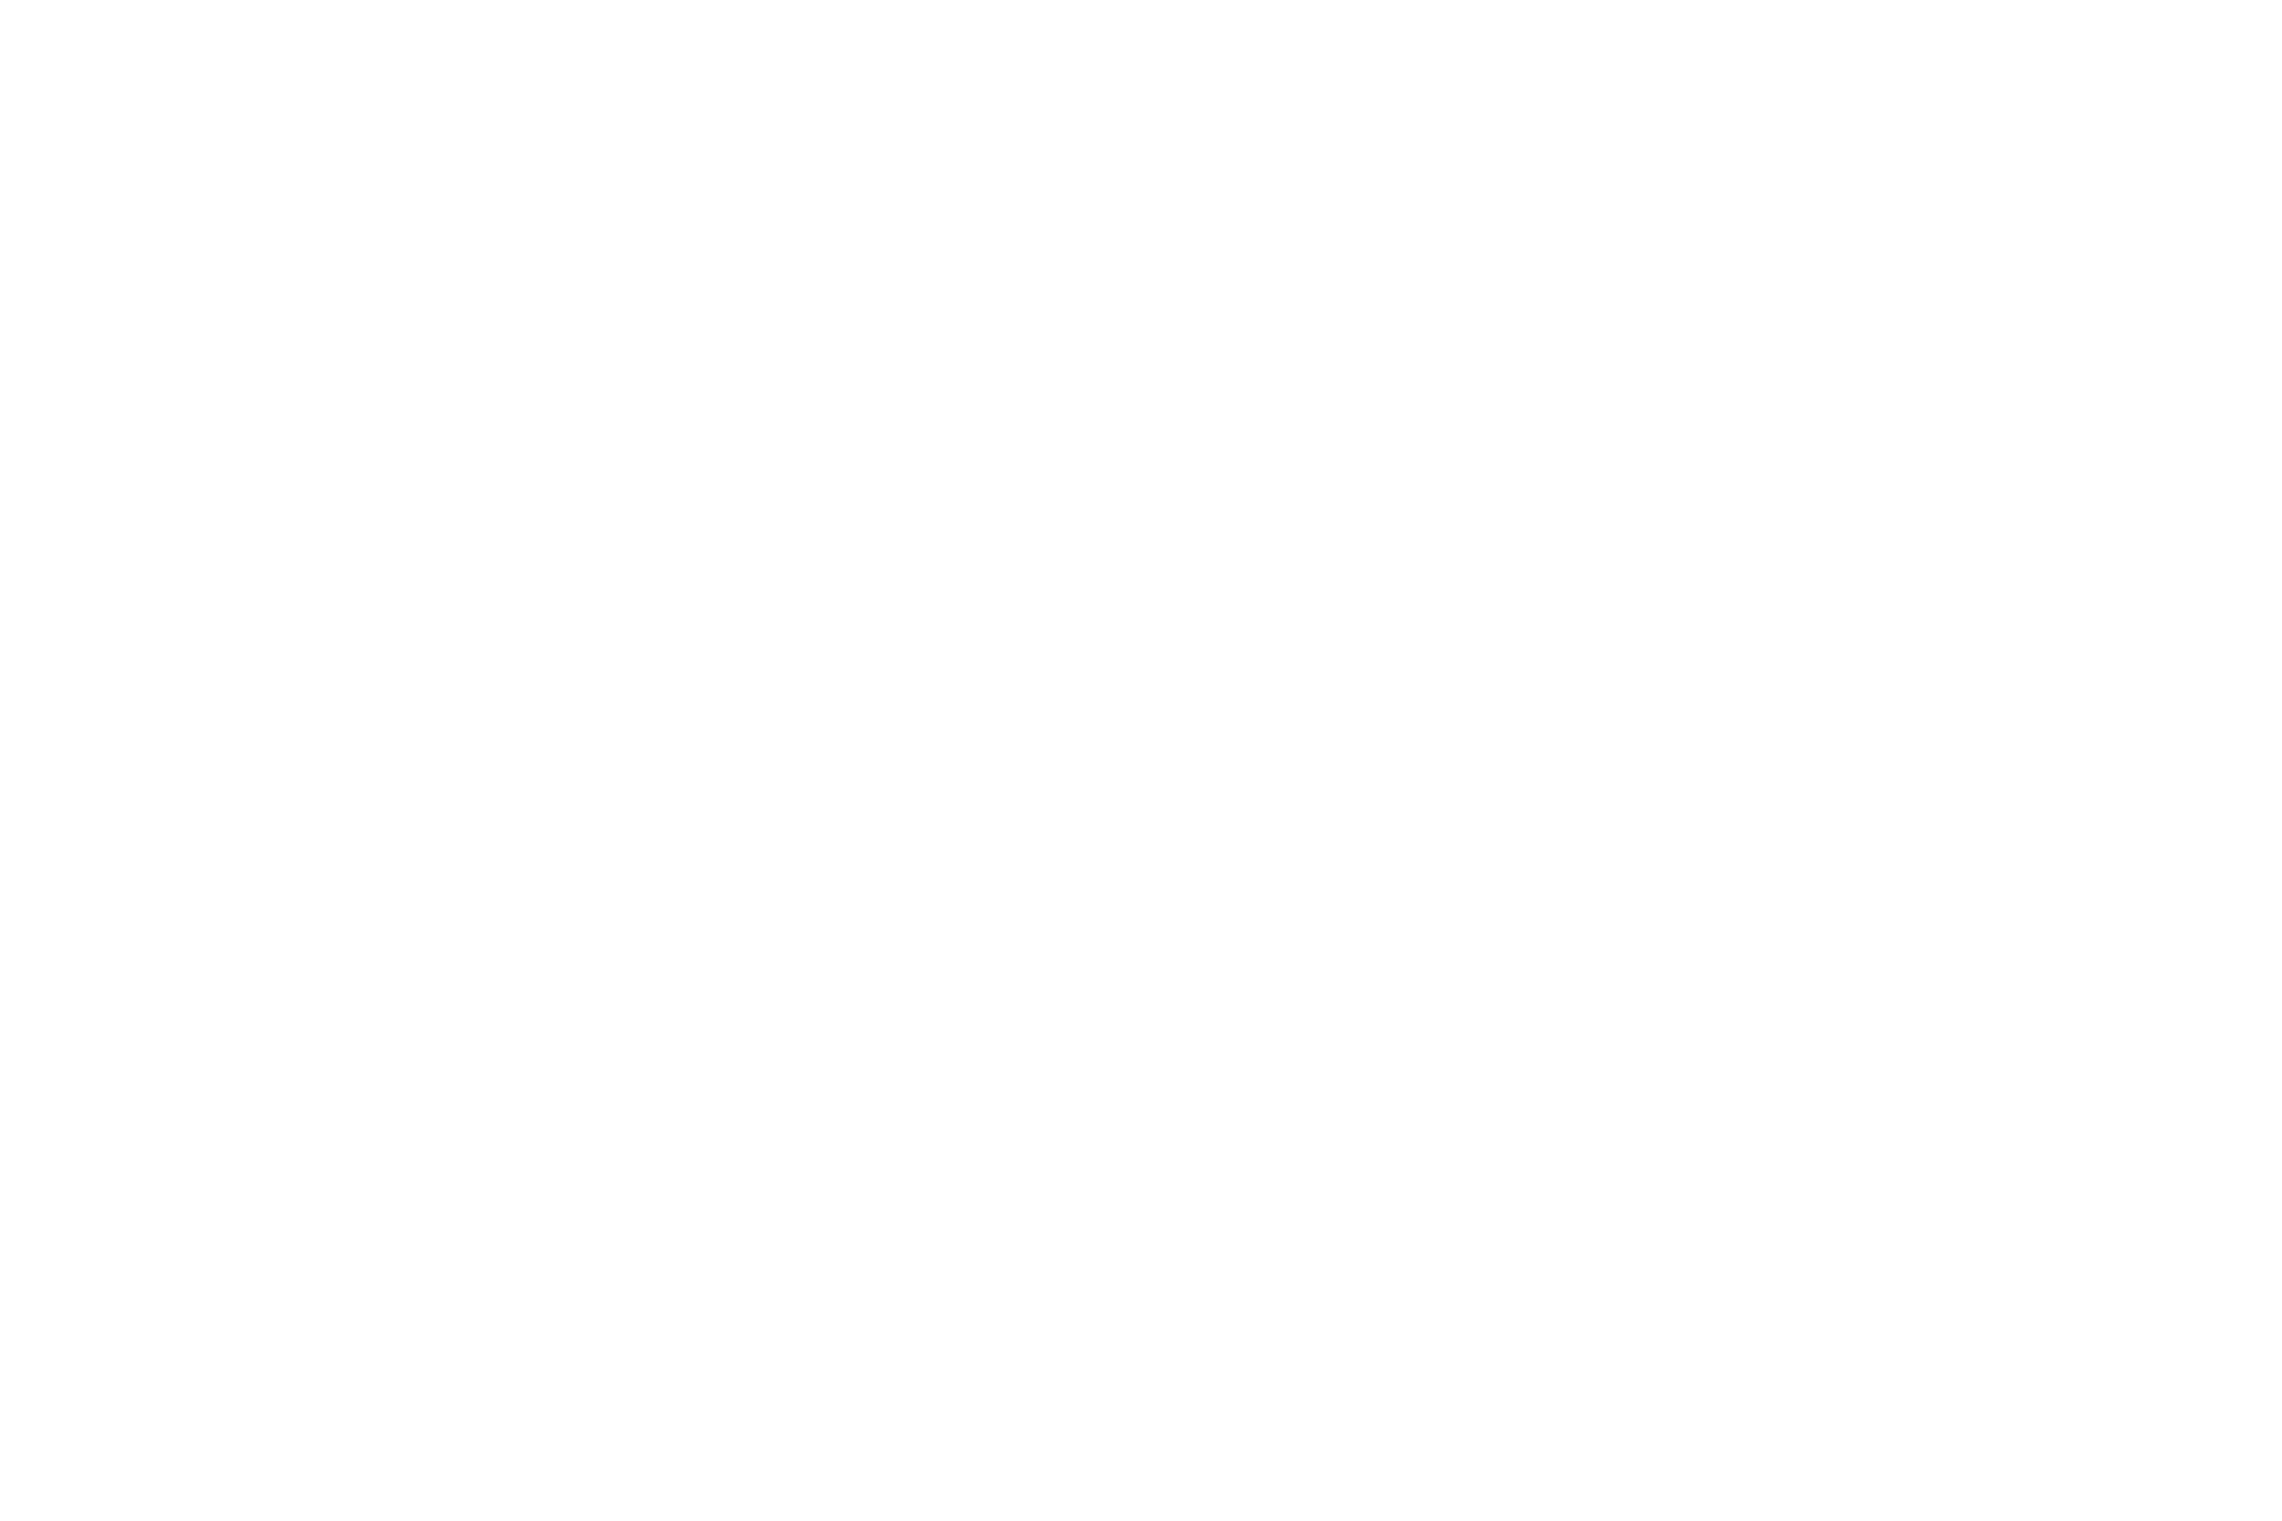 Danielle Levitt celebrity photography environmental portrait of film director Ana Lily Amirpour standing on dark urban city street with neon lights at night wearing tech headphones around neck